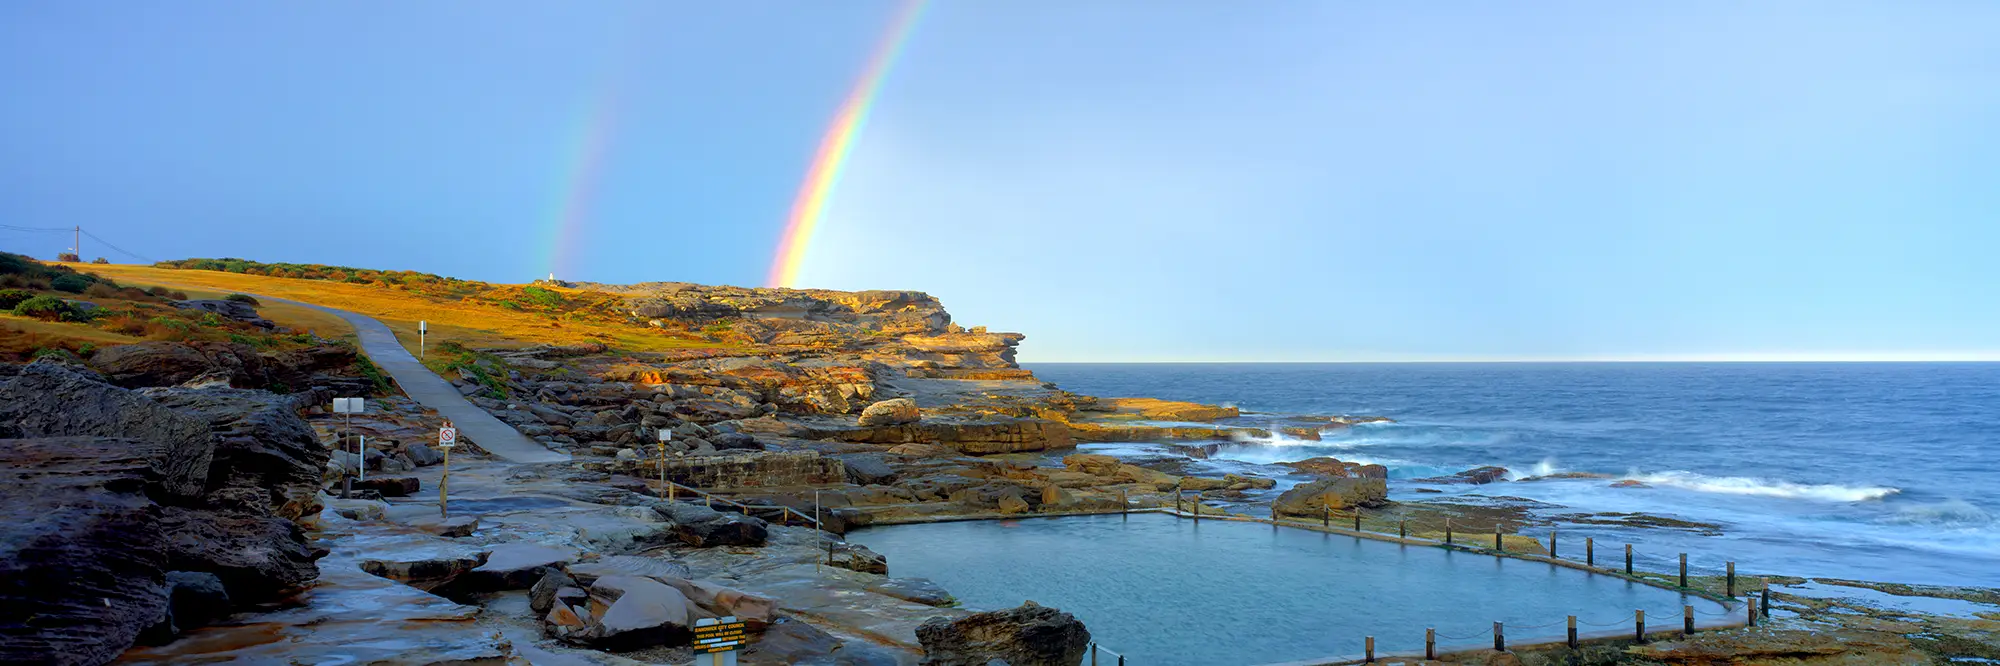 Maroubra Ocean Baths Panoramic Rainbow Framed Photo Artwork